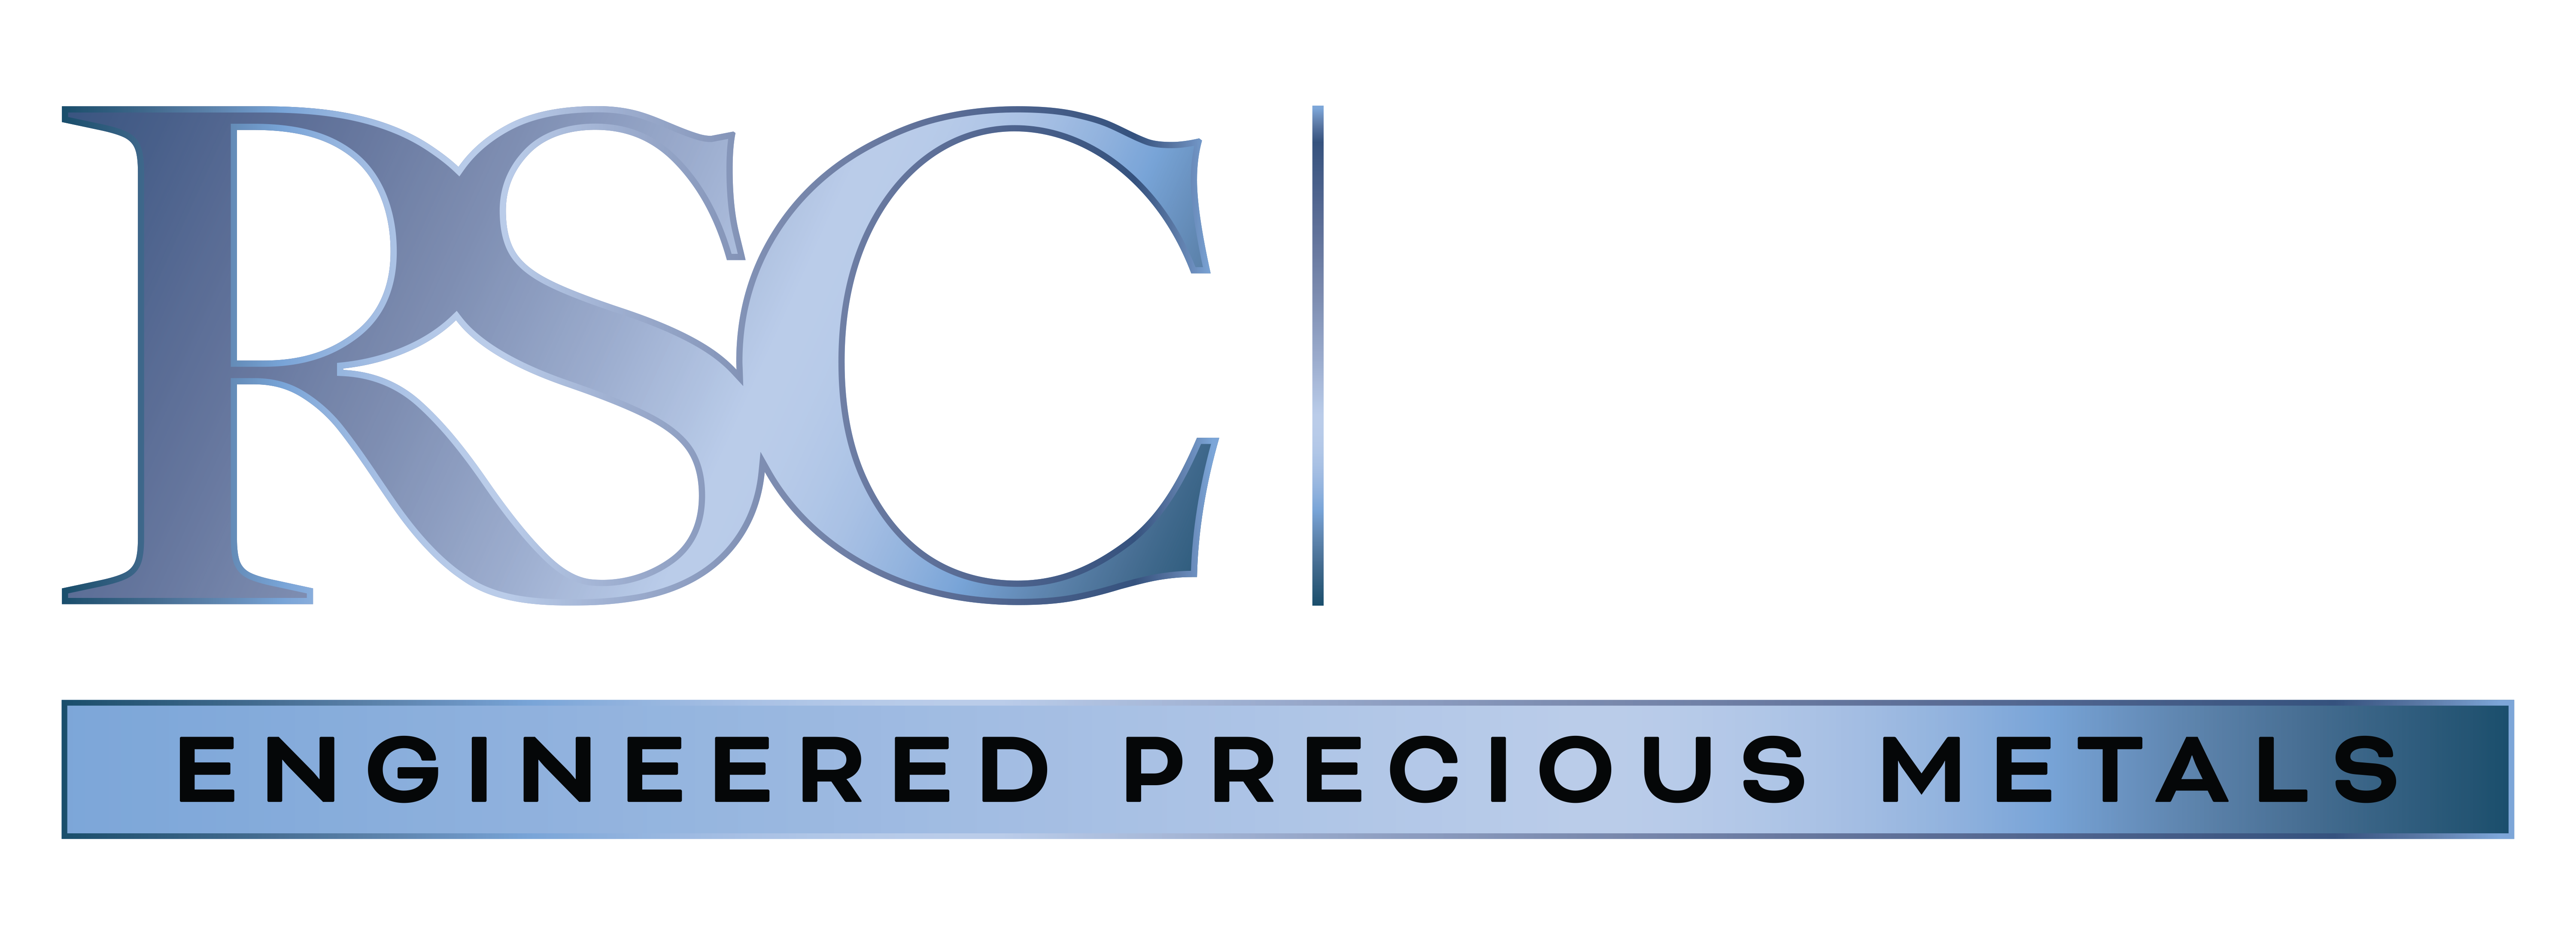 Reliable Silver Corporation Logo